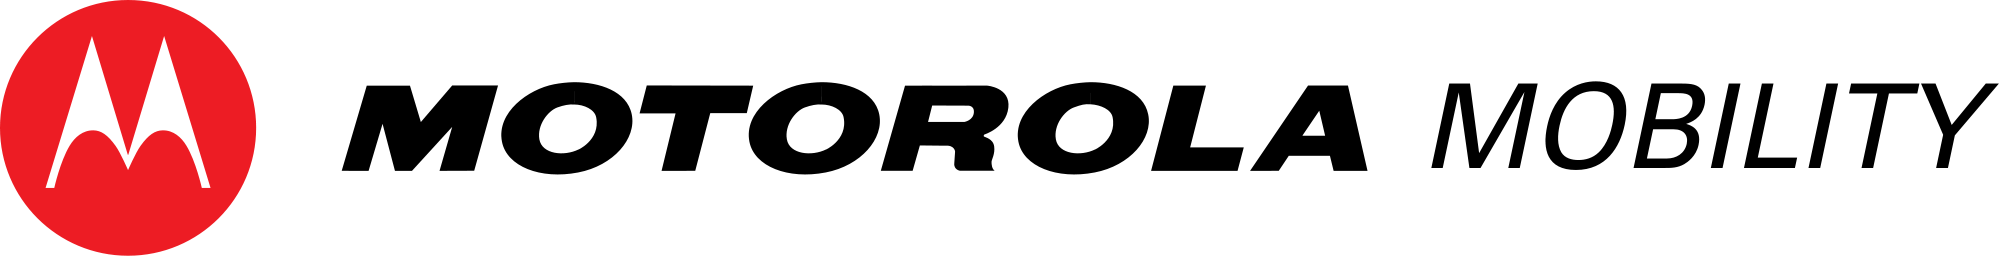 Motorola Mobility_logo